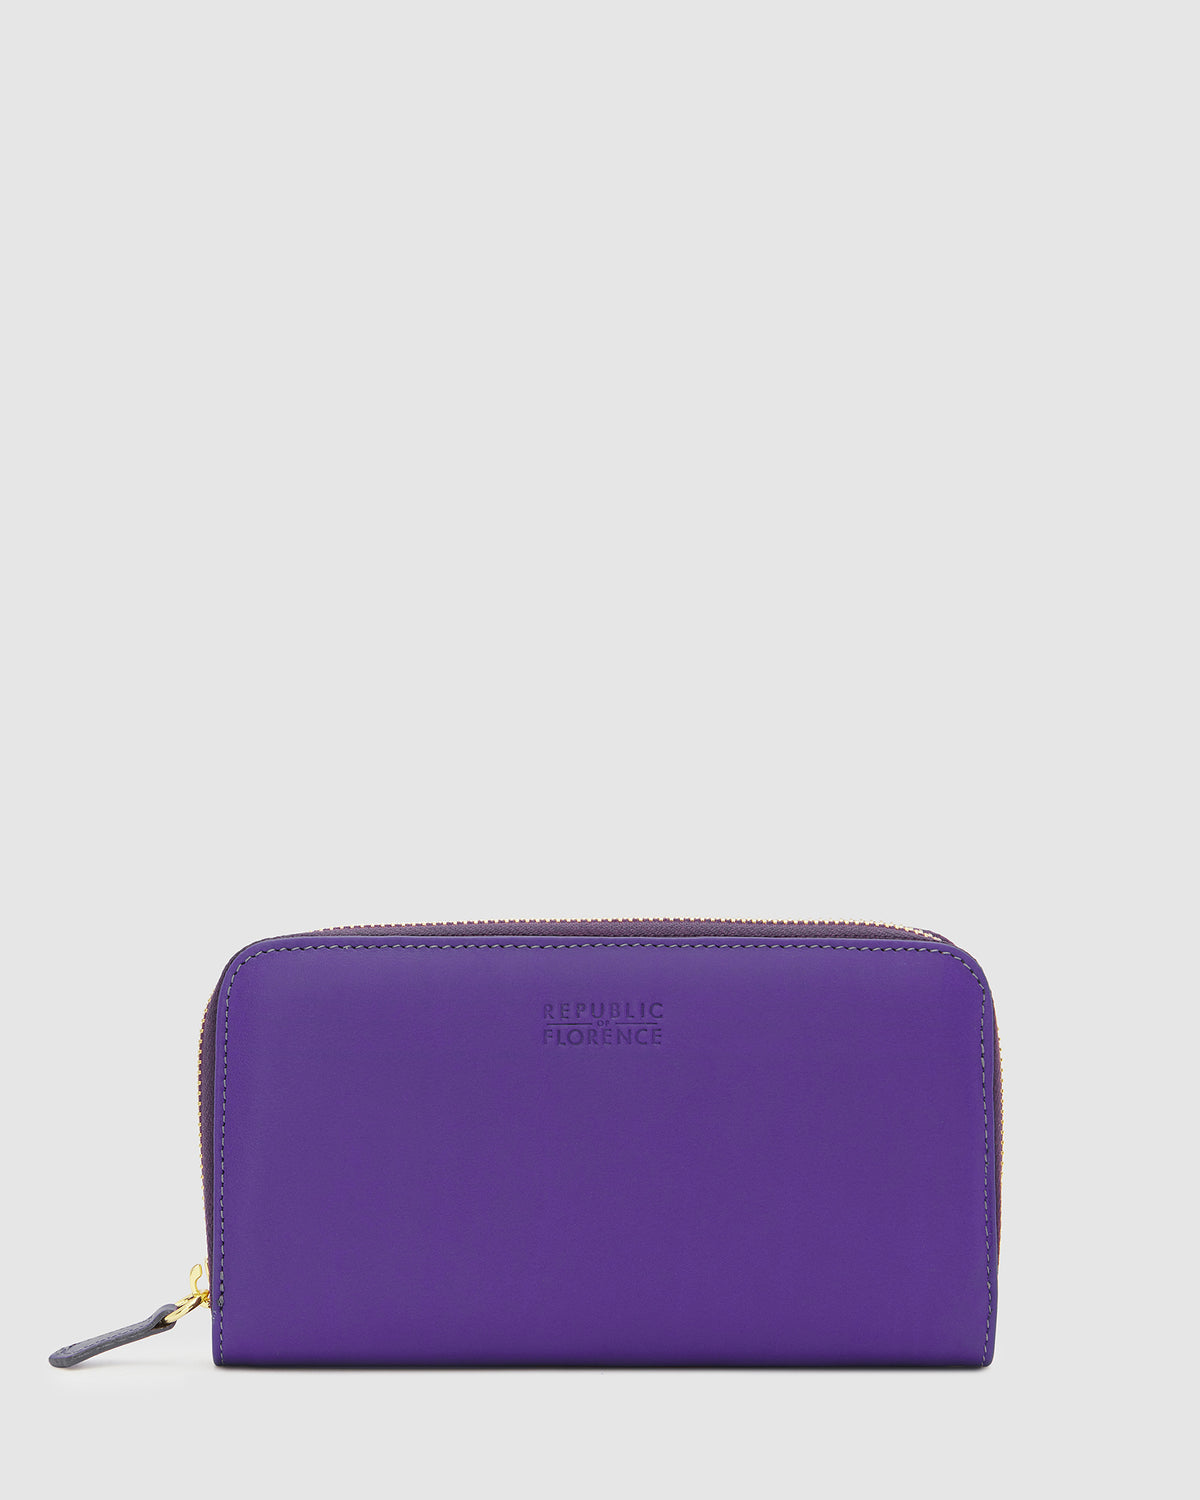 Wabasta Crochet Square Pocketbook Wallet - for Men & Women - (Purple)